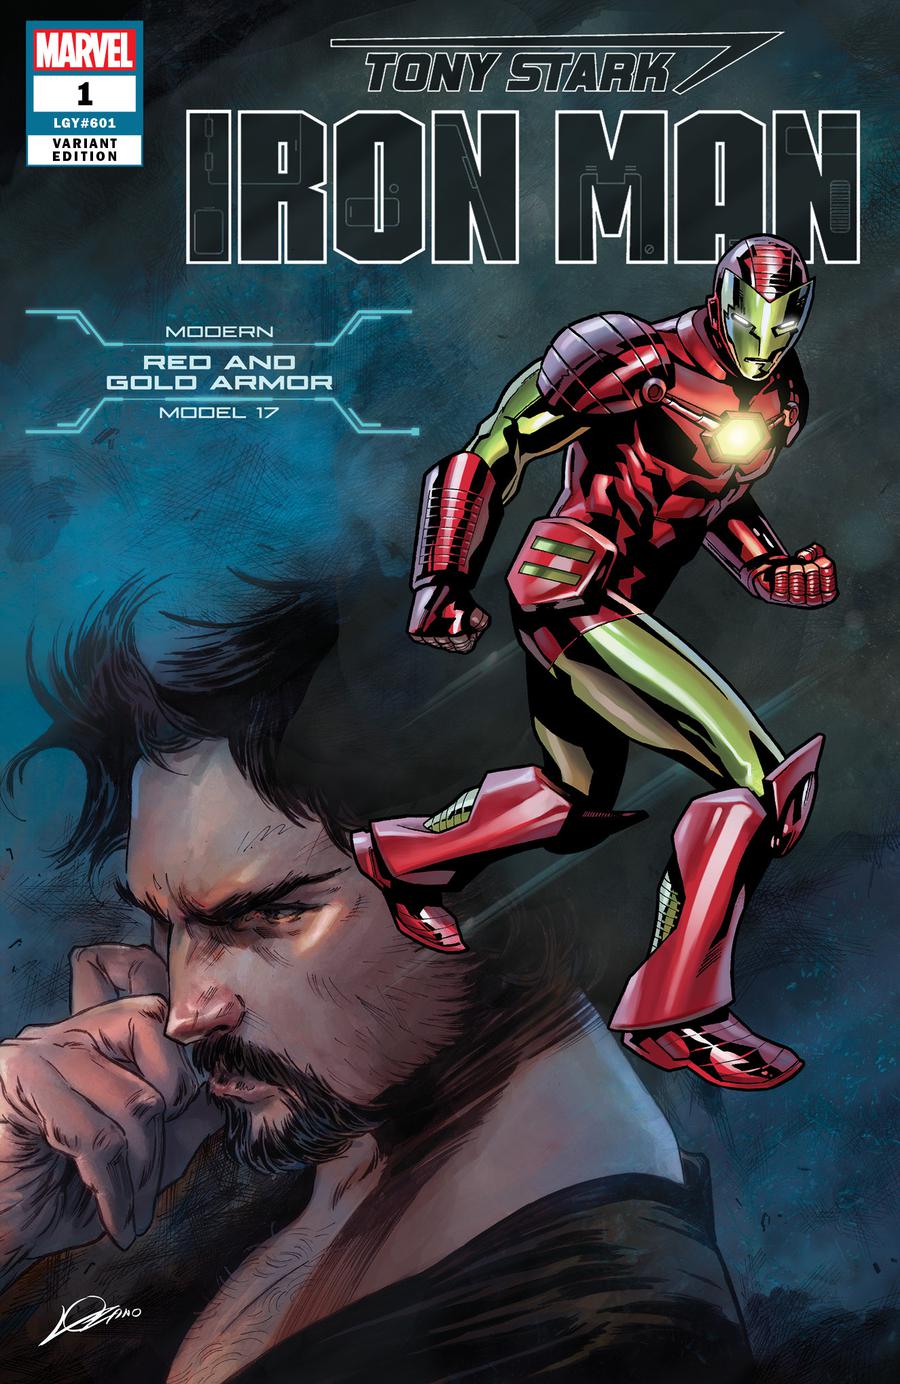 Tony Stark Iron Man #1 Model 17 Modern Red and Gold Armor Edition (Lozano) [2018]